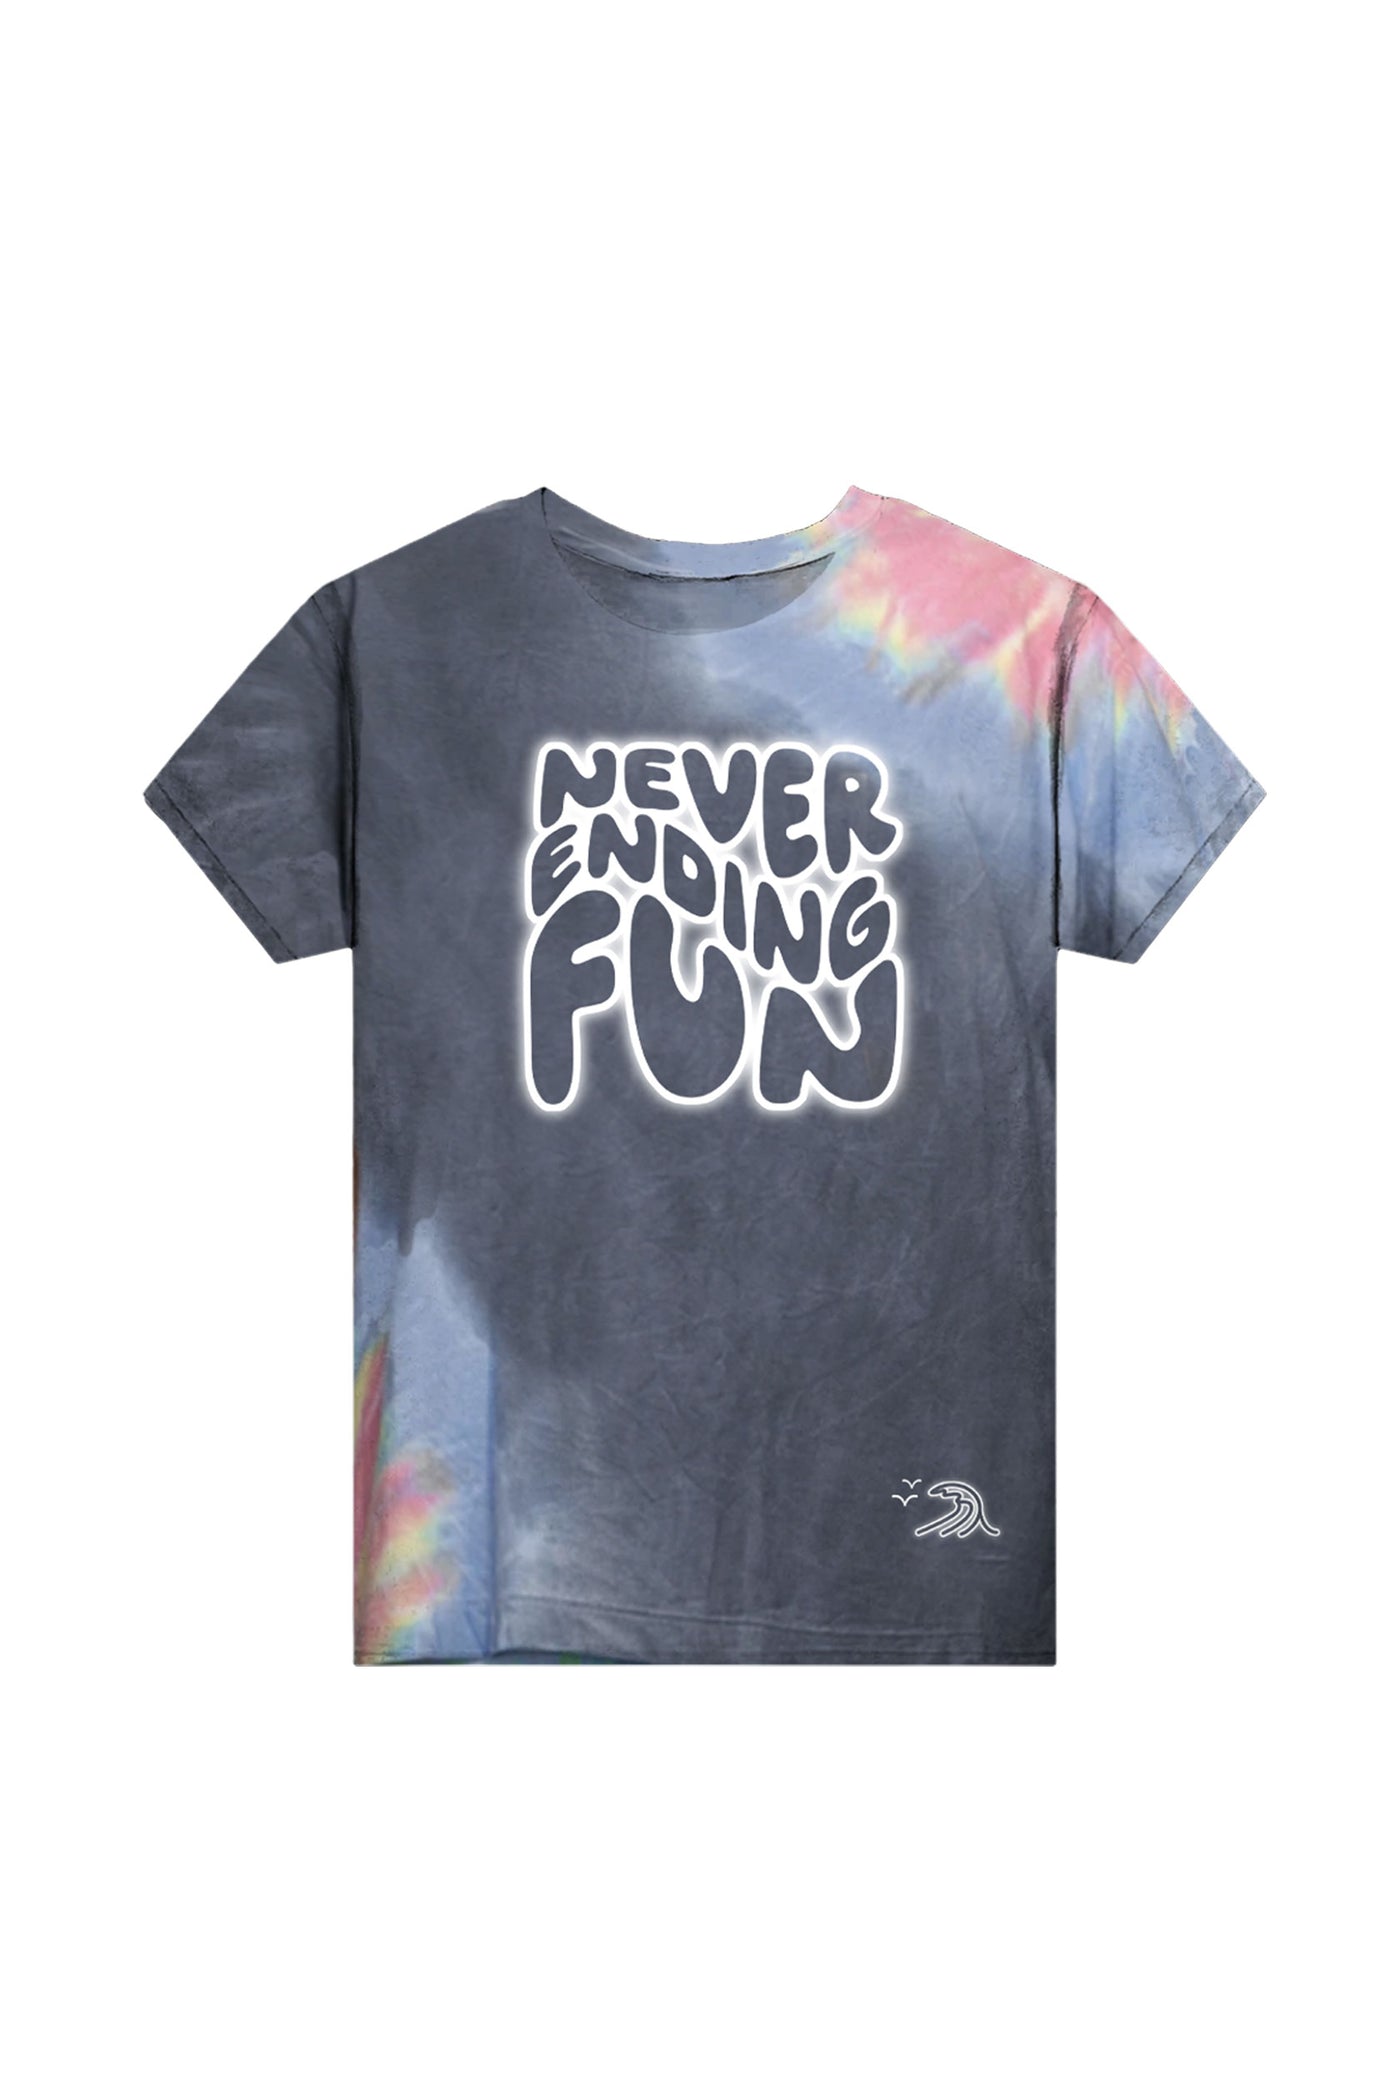 Kid's Fun Tie Dye t-shirt, Unisex